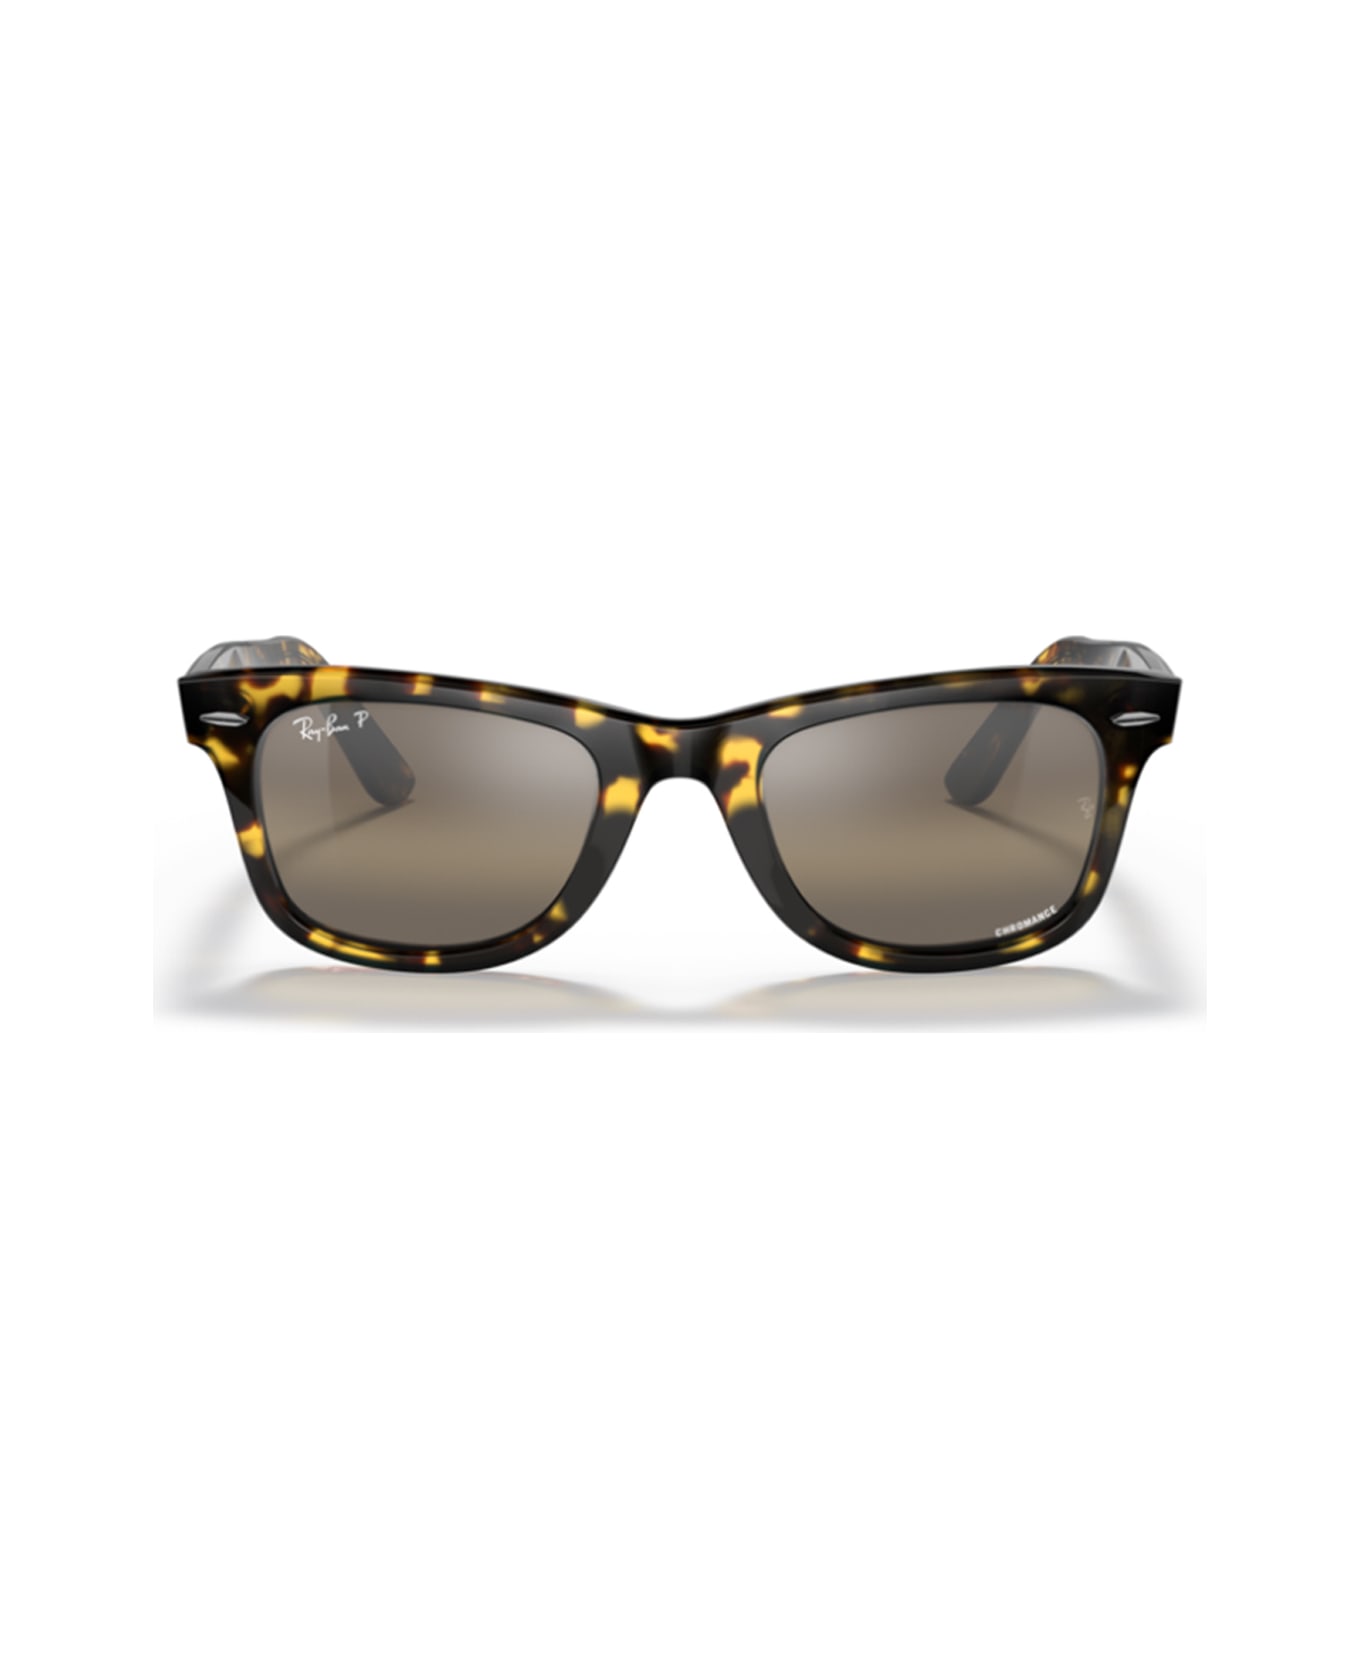 Ray-Ban Rb2140 Wayfarer Sunglasses - Marrone